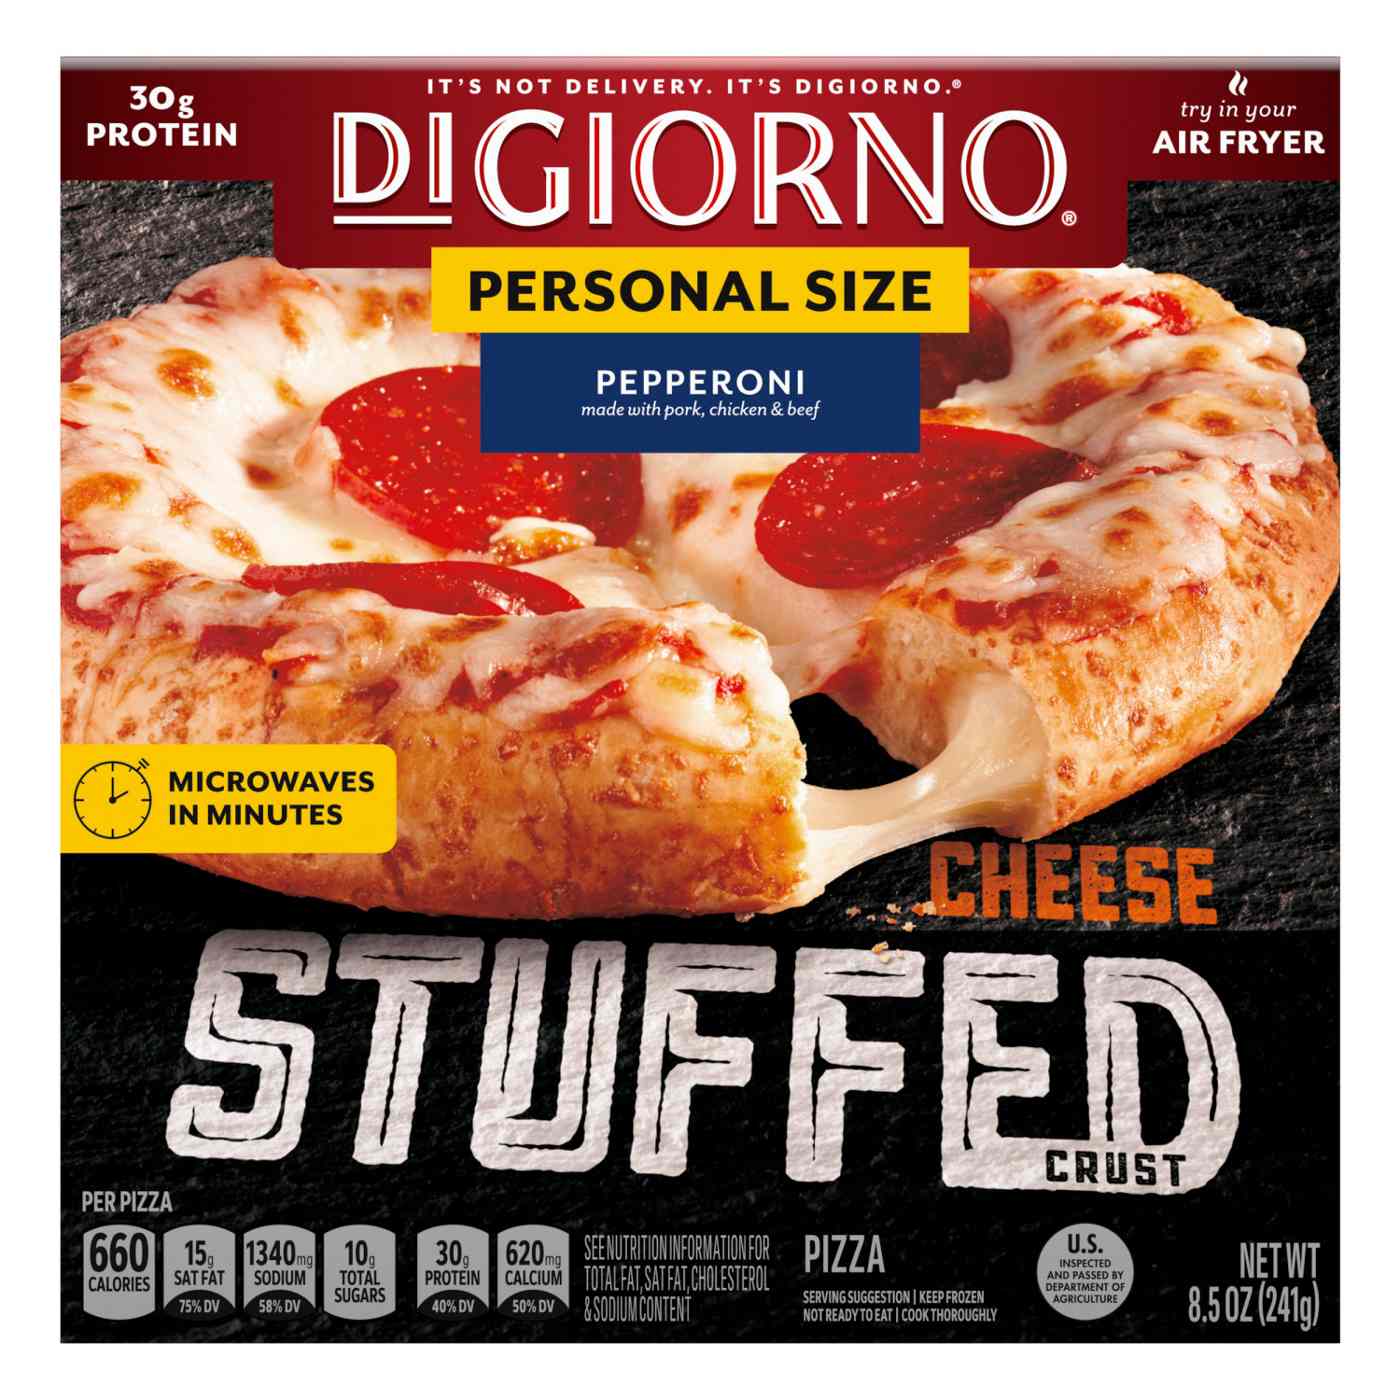 DiGiorno Cheese Stuffed Crust Personal Size Frozen Pizza - Pepperoni; image 1 of 2